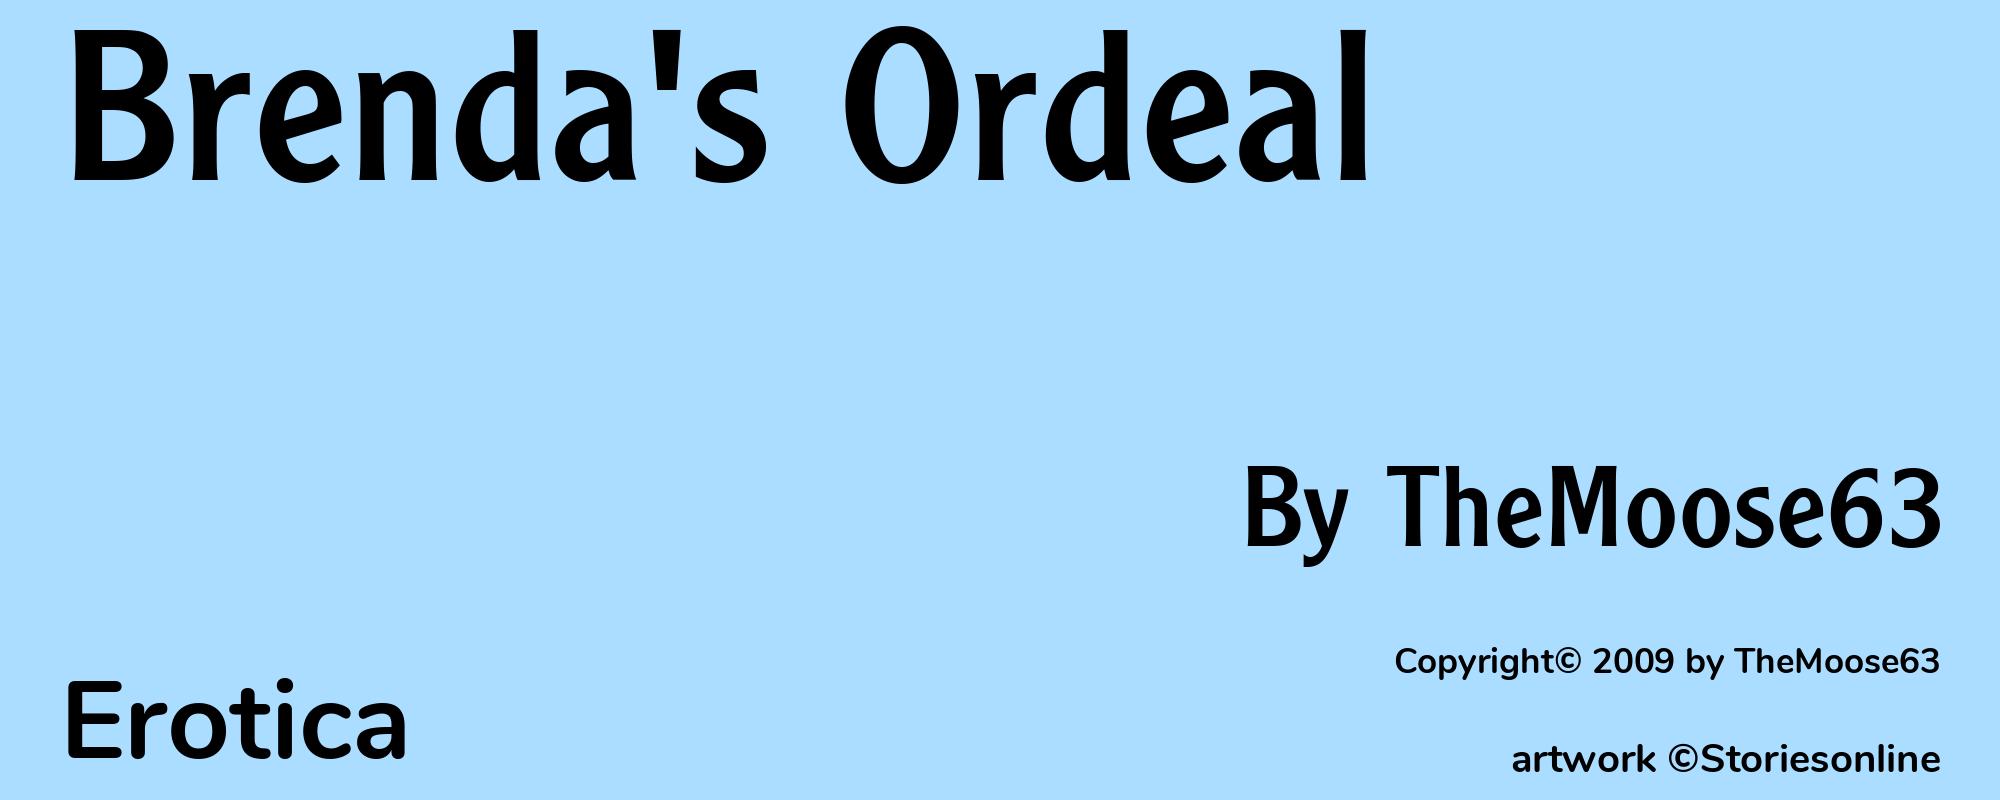 Brenda's Ordeal - Cover